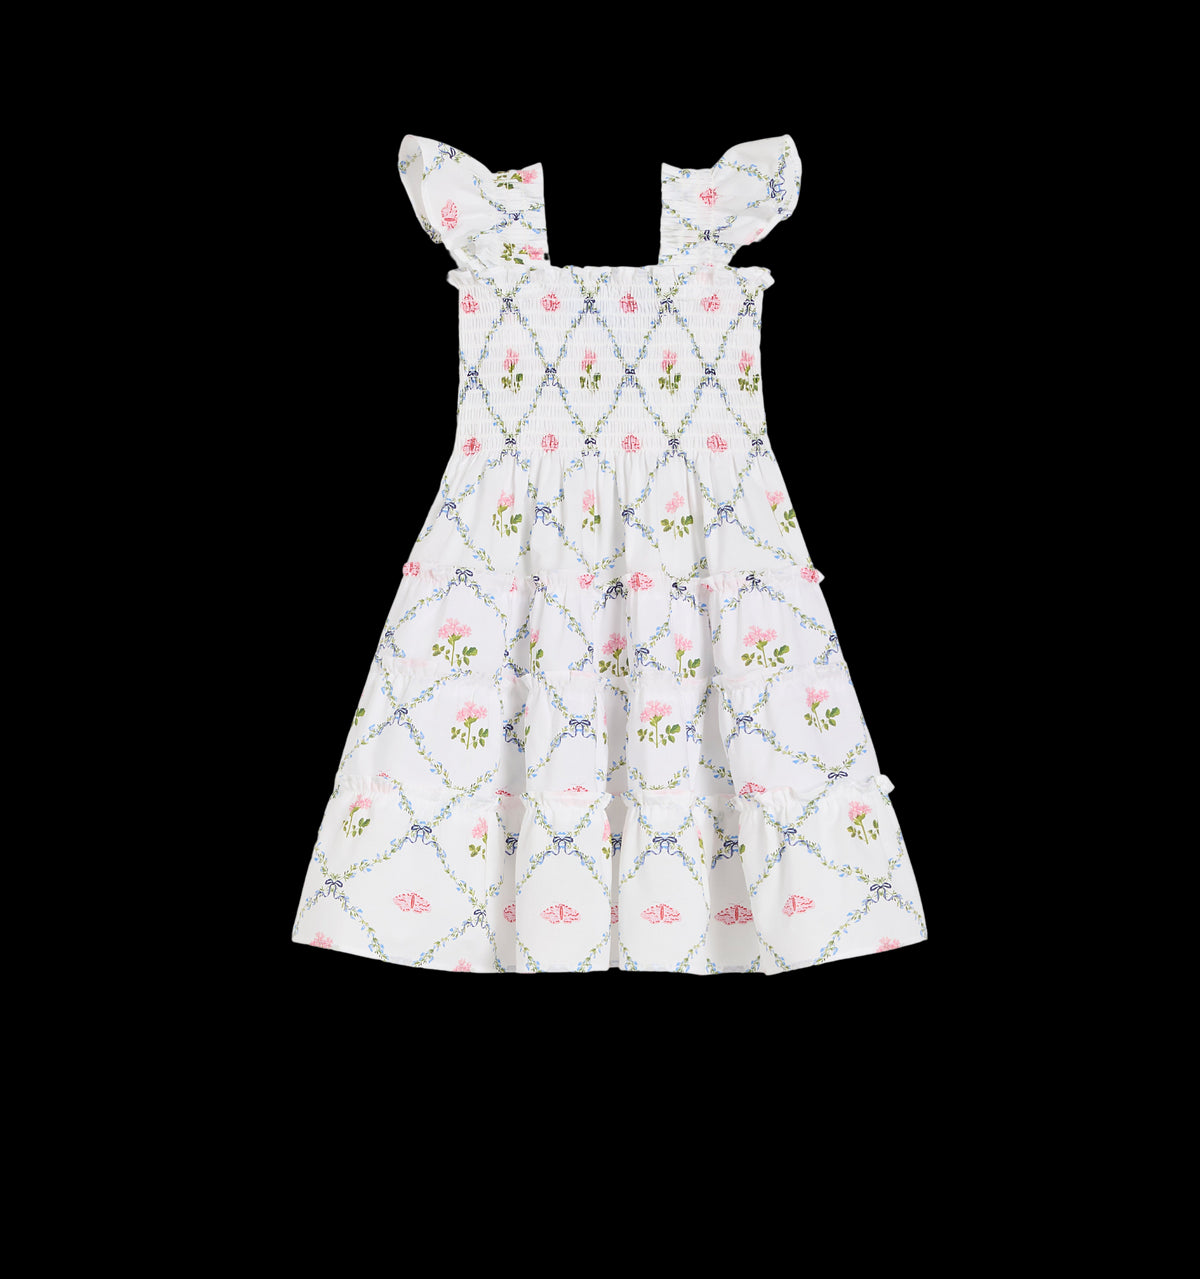 The Tiny Ellie Nap Dress in Butterfly Trellis Cotton Poplin